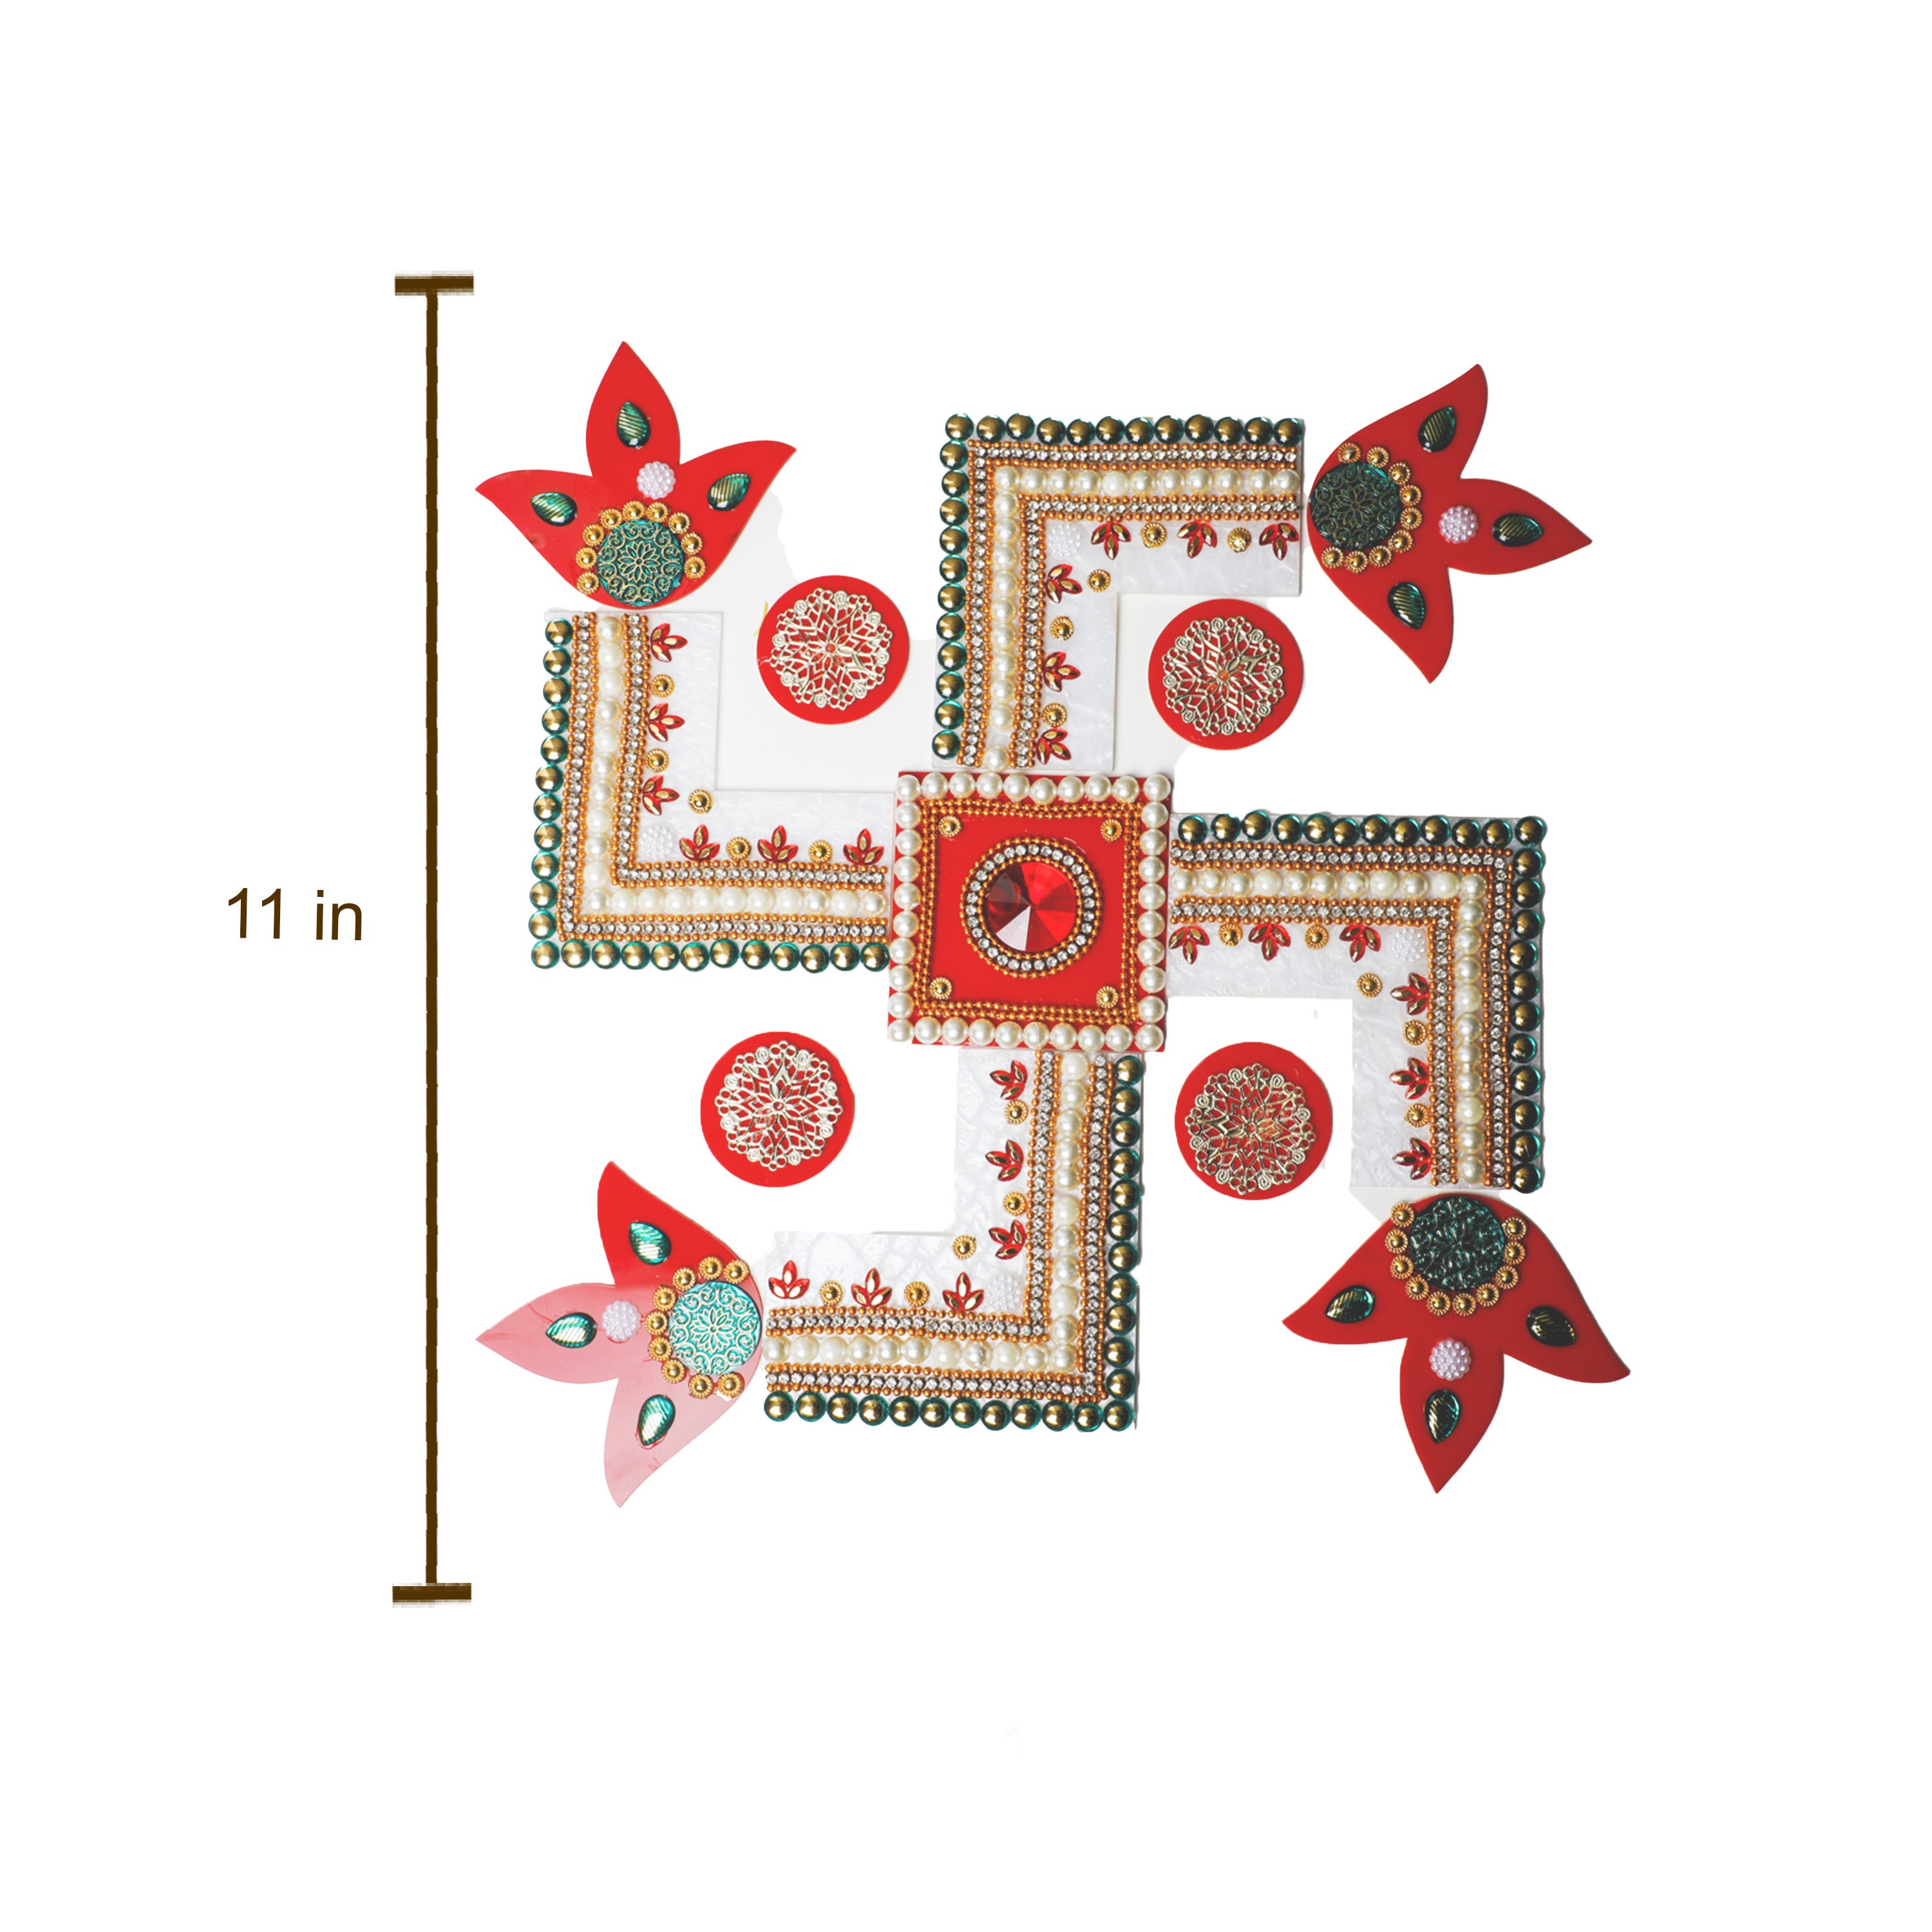 A perfect rangoli for diwali decoration